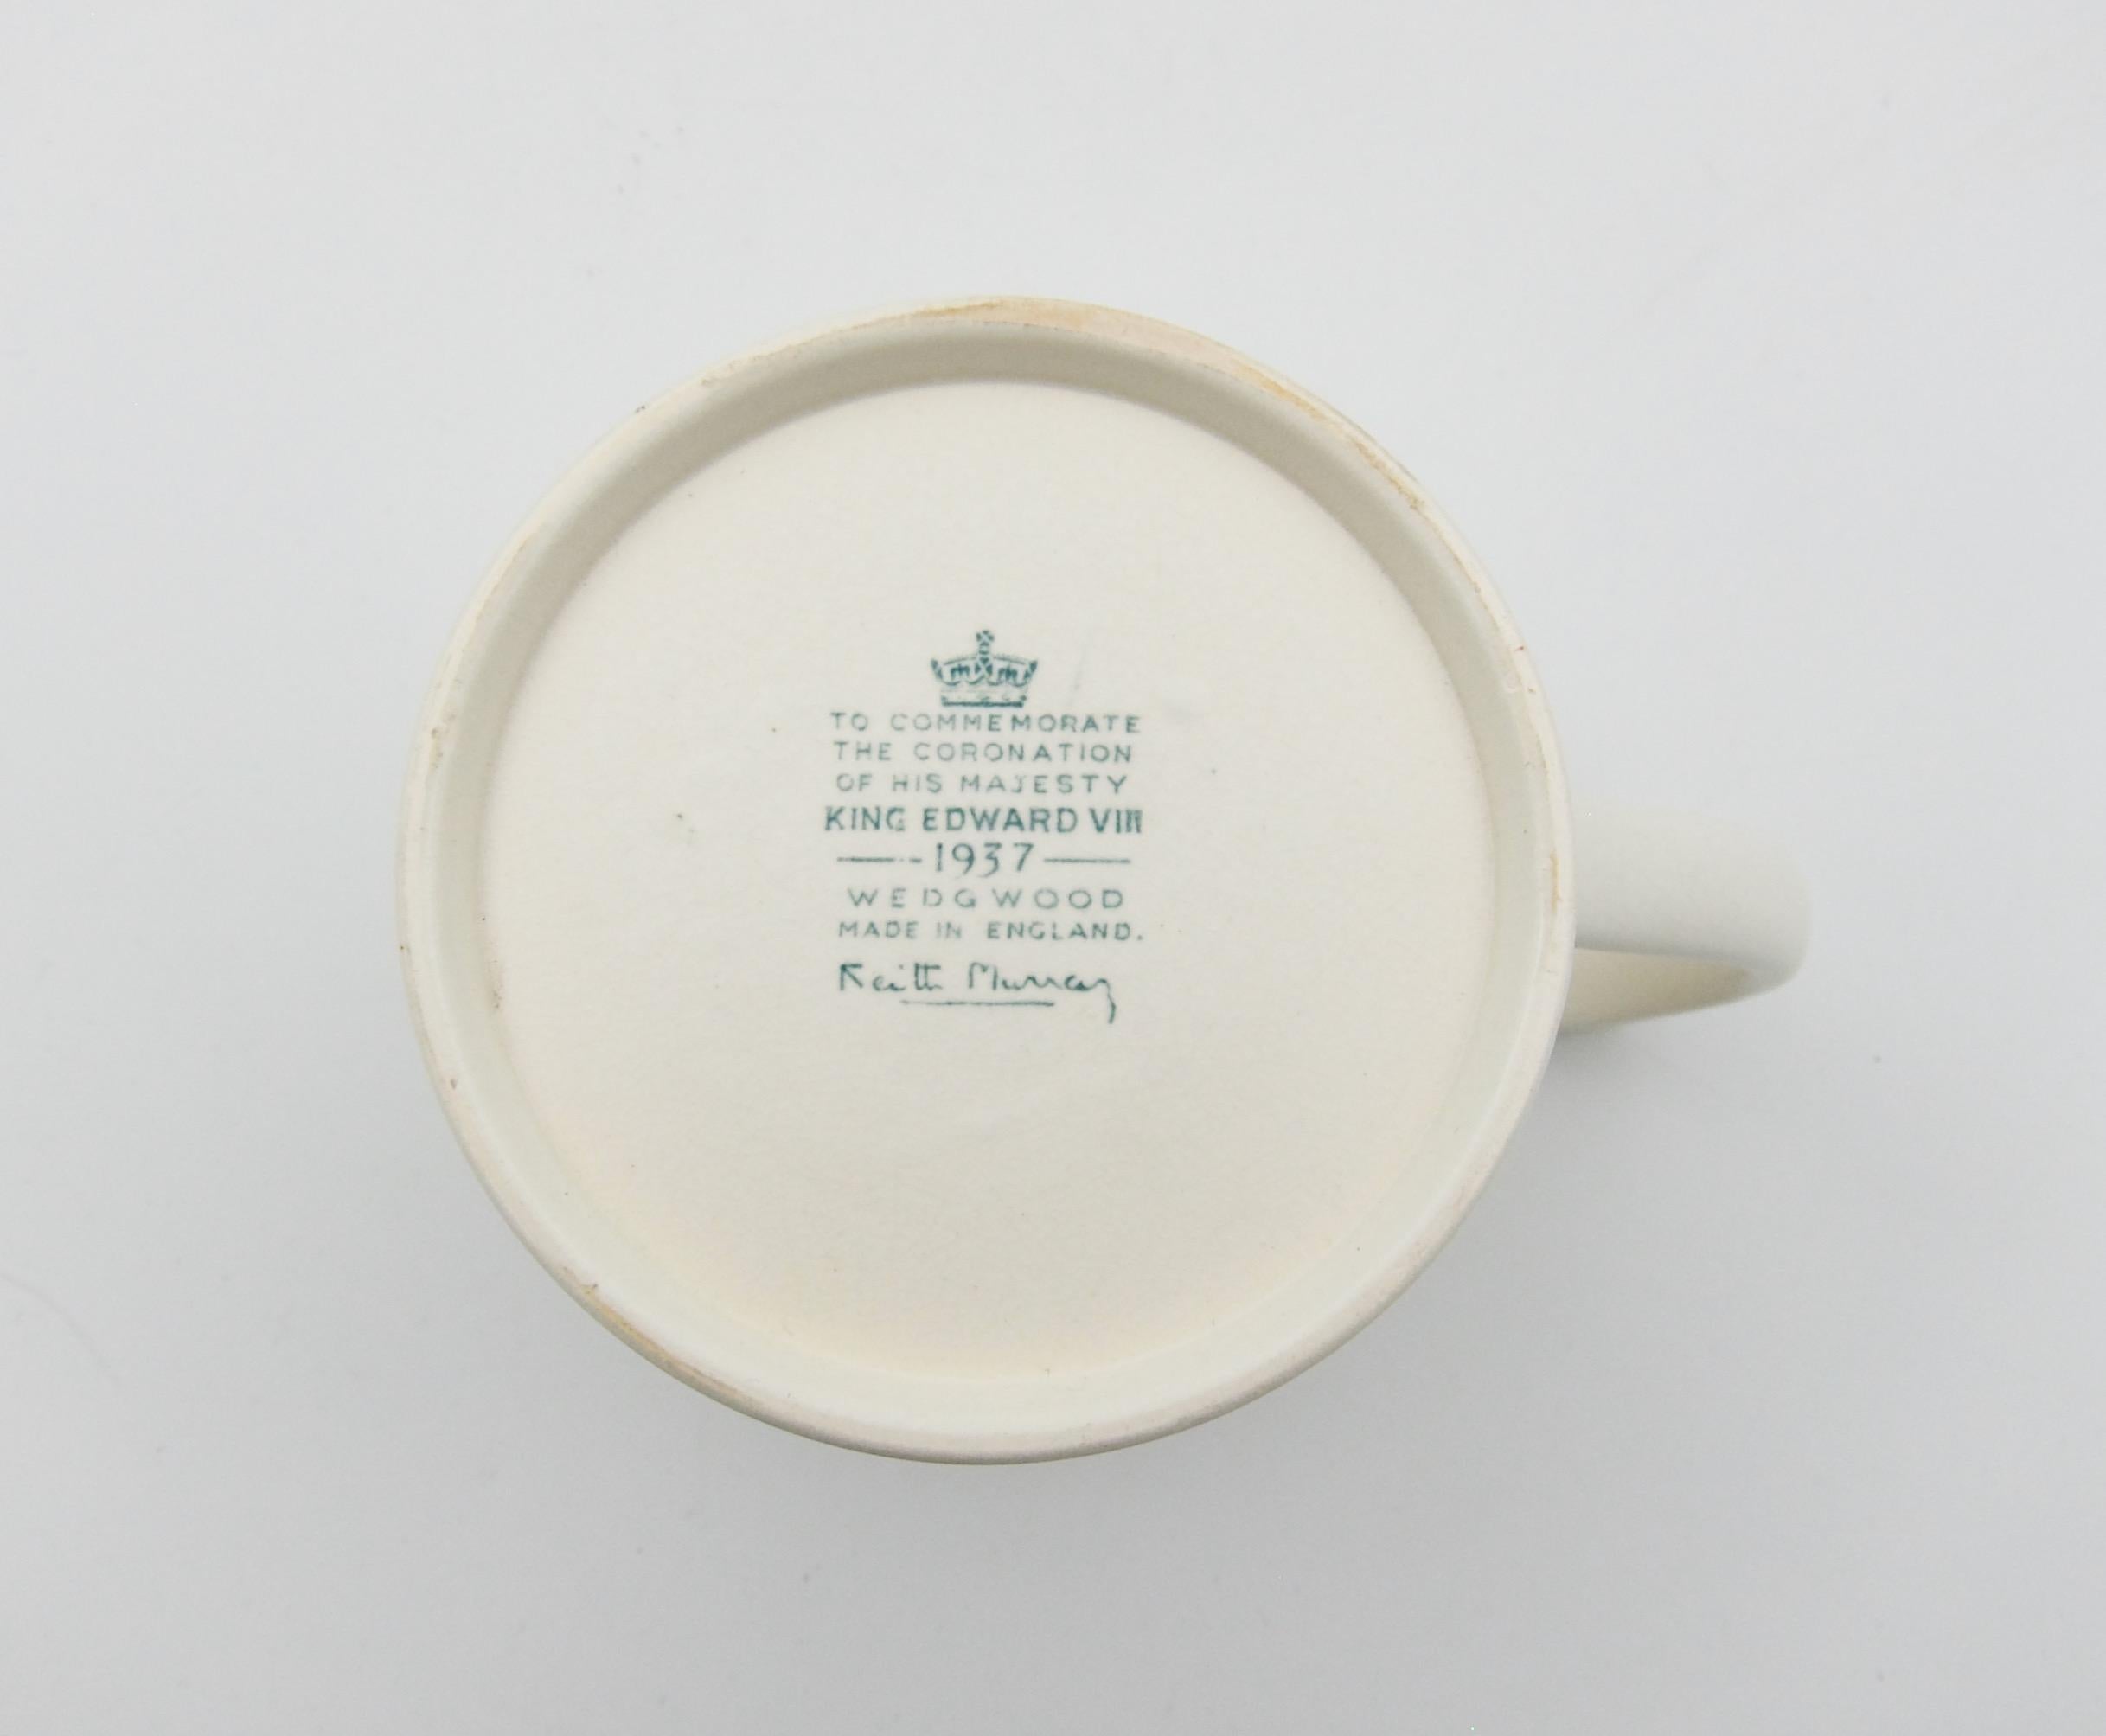 Art Deco 1937 Commemorative Coronation Mug King Edward VIII Keith Murray for Wedgwood 